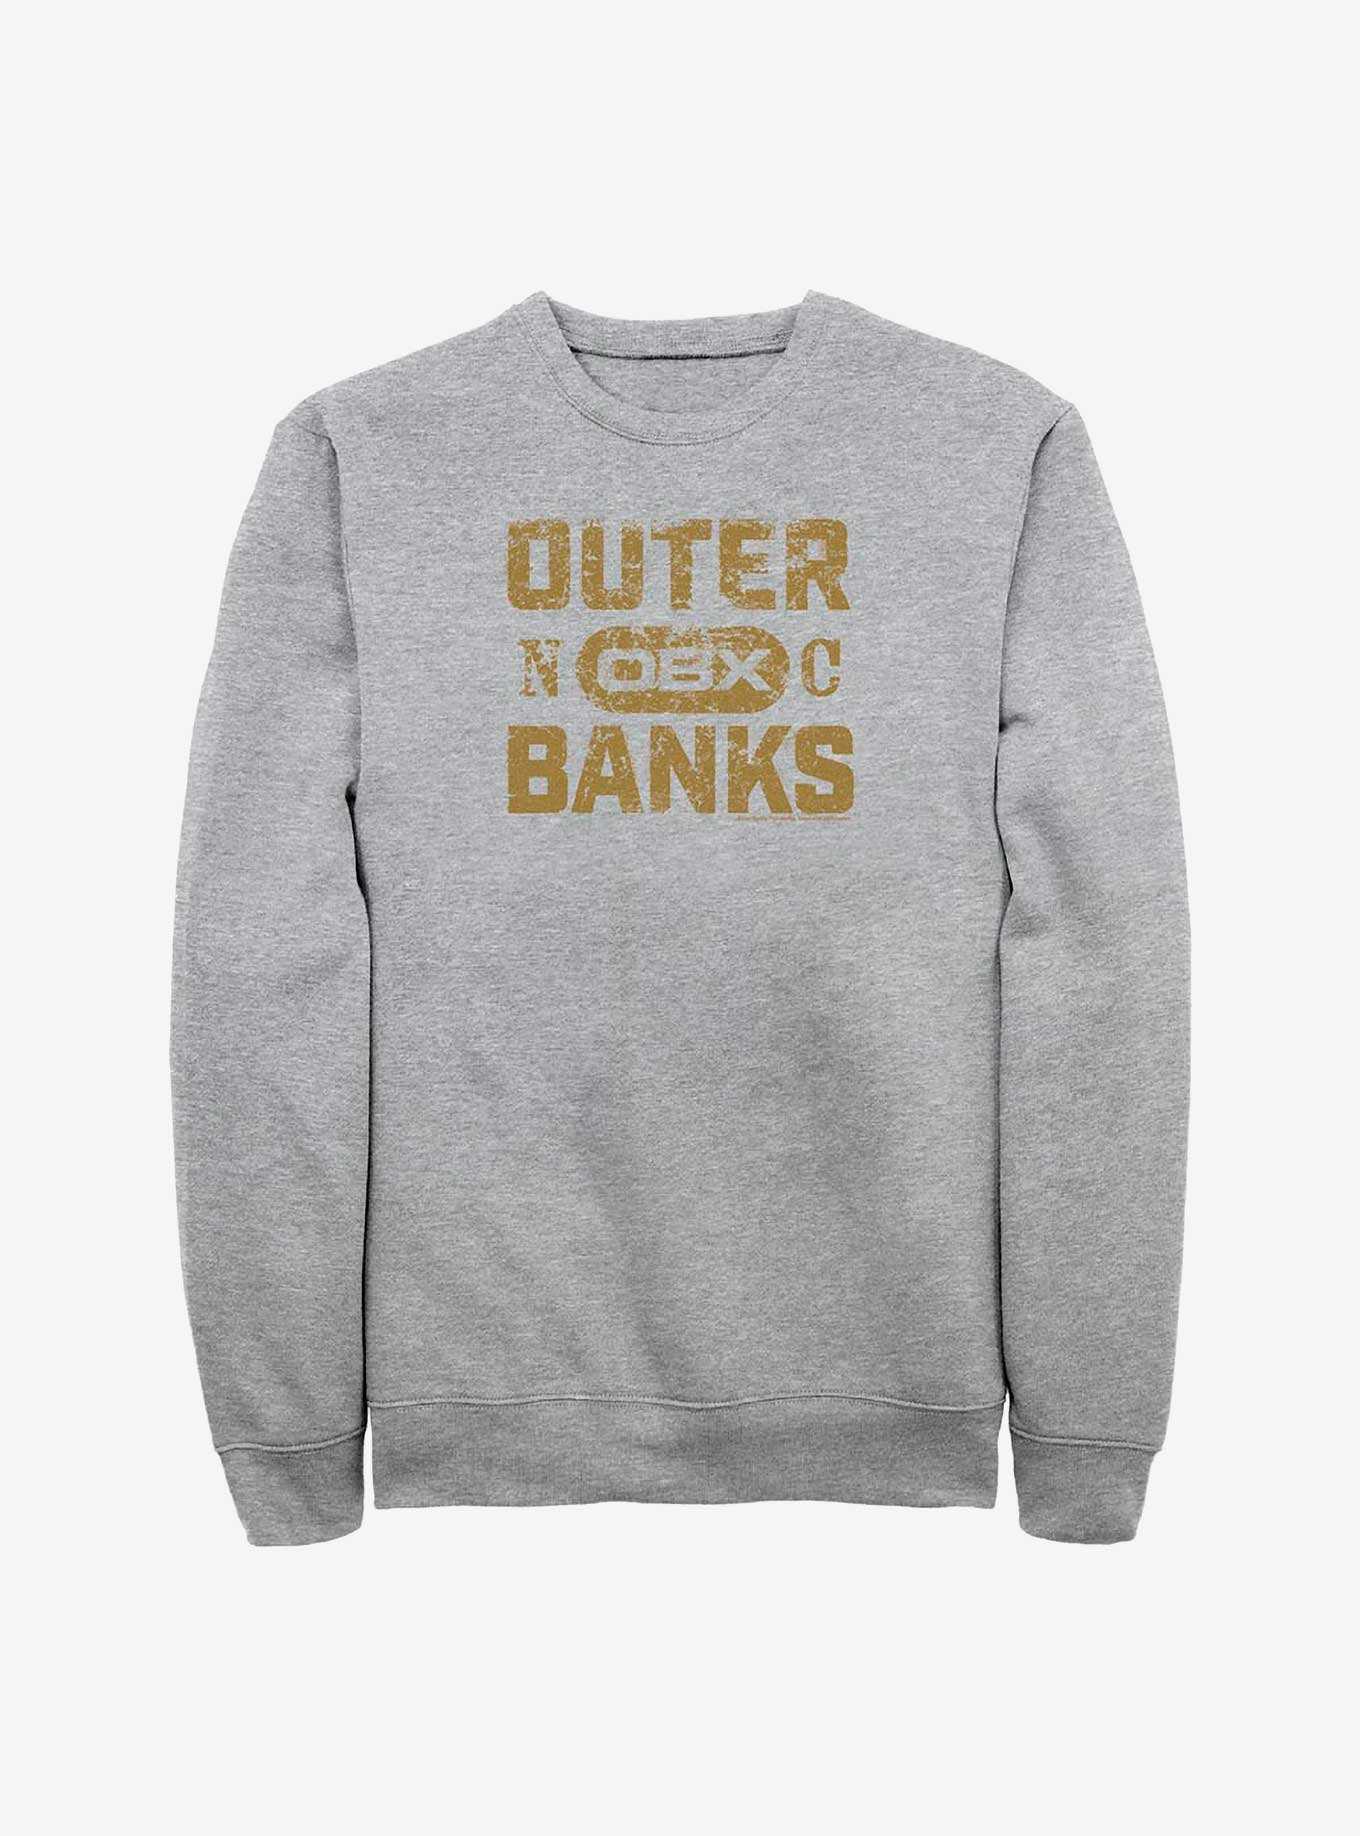 Outer Banks Distressed Type Sweatshirt, , hi-res